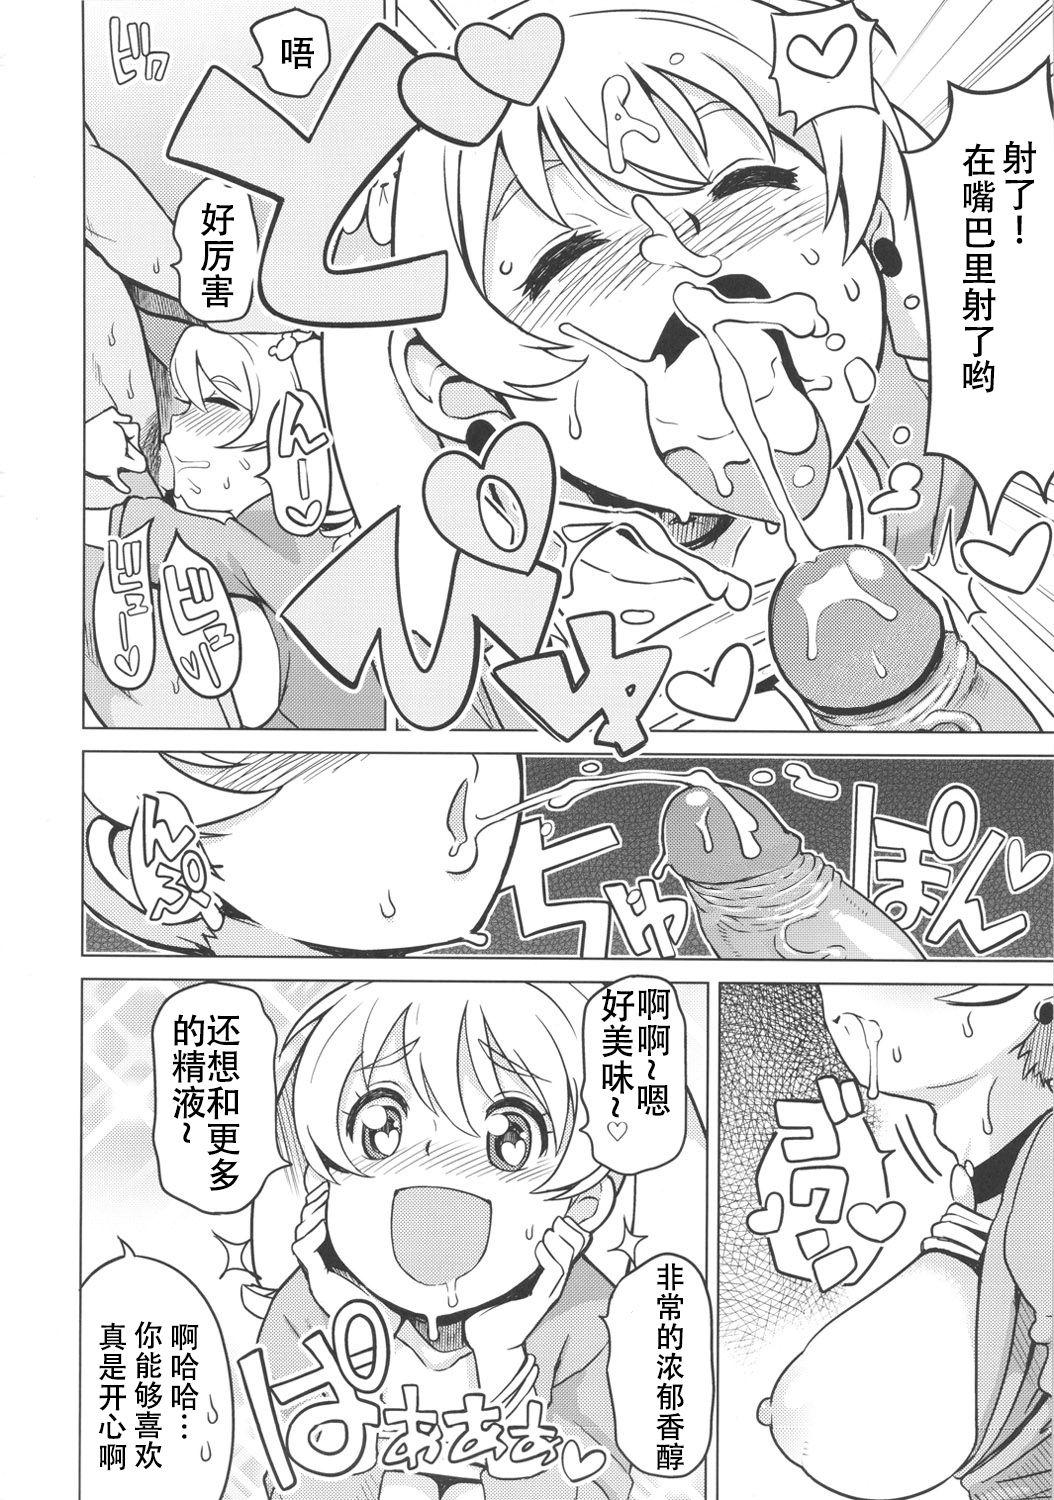 Dad Chibikko Bitch Hunters 2 - Digimon xros wars Cheating - Page 12